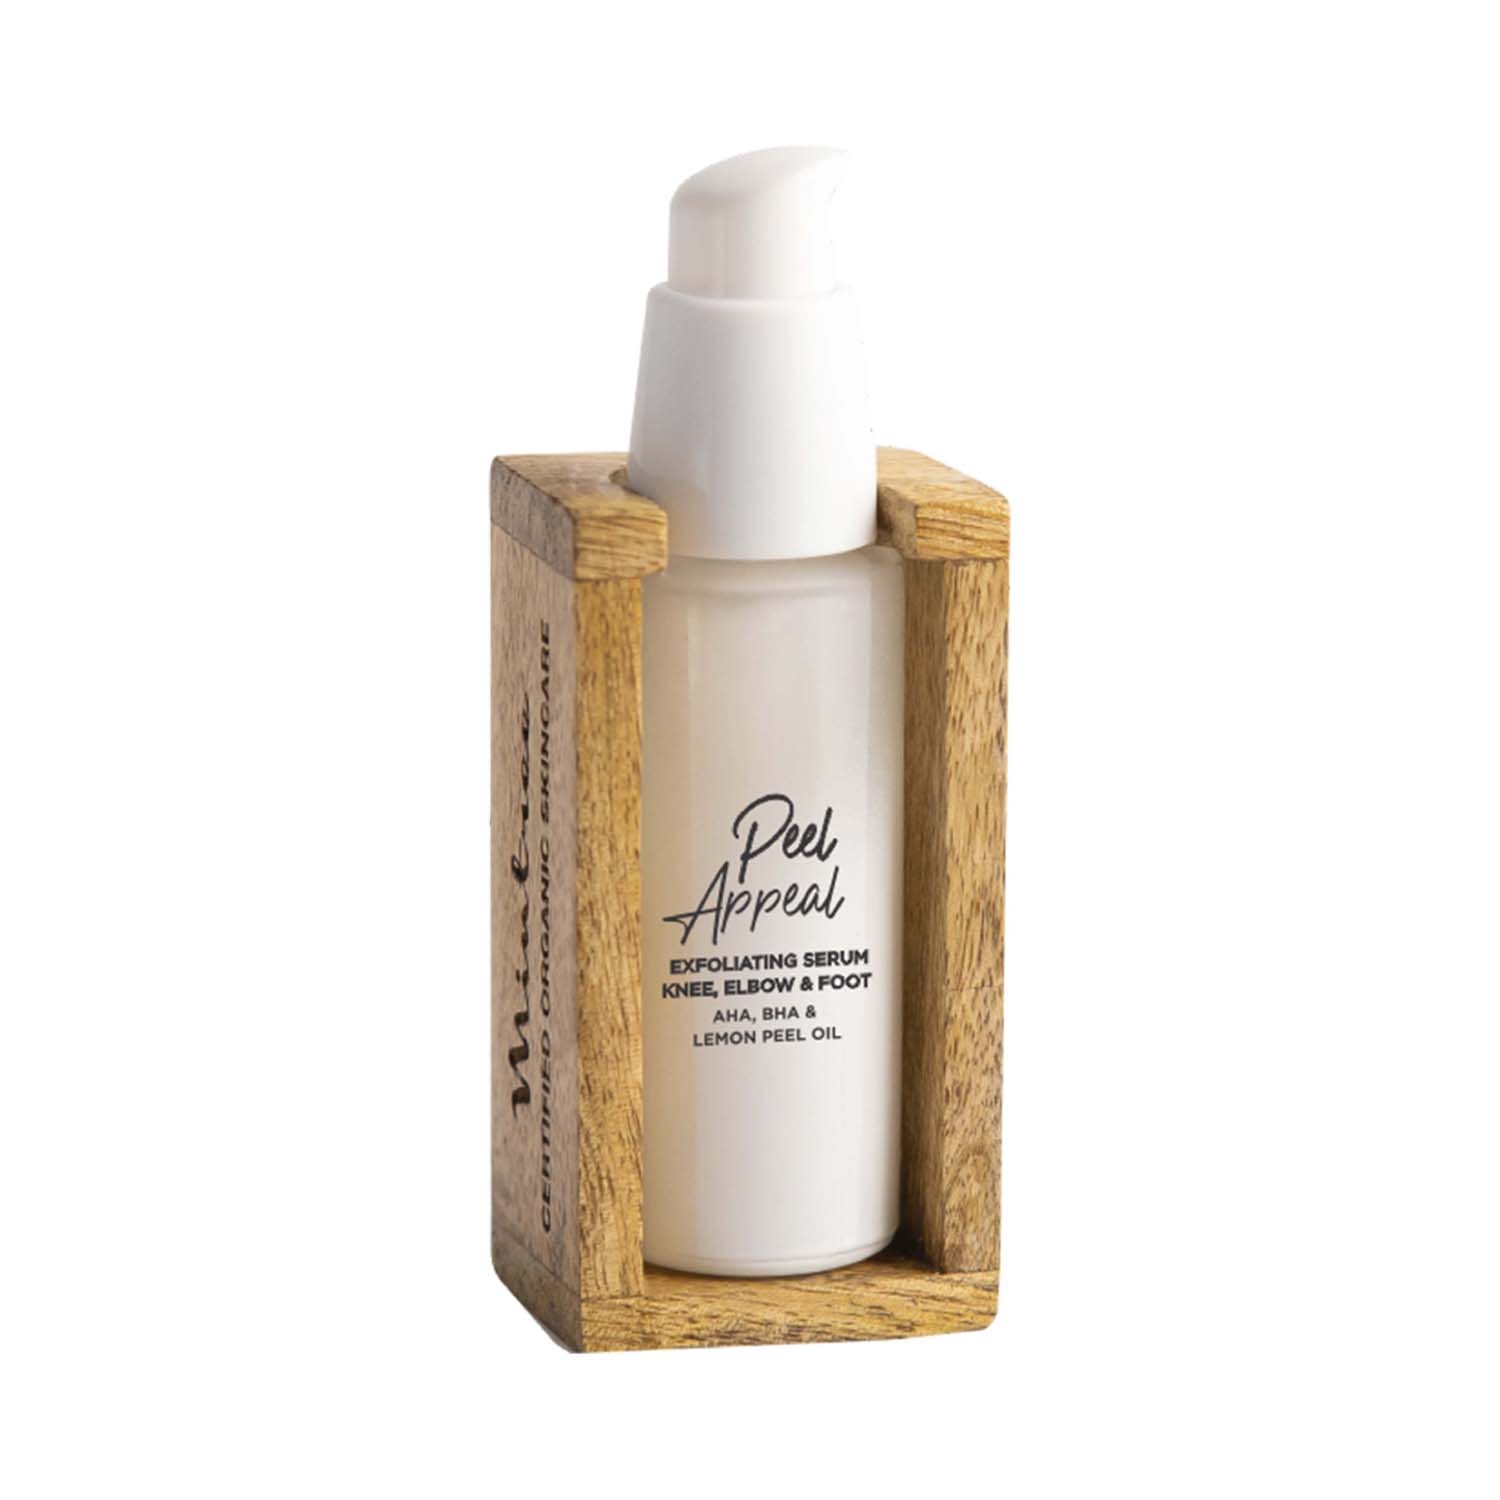 Mintree | Mintree Certified Organic Peel Appeal Exfoliating Serum Brightens & Softens Skin (30ml)